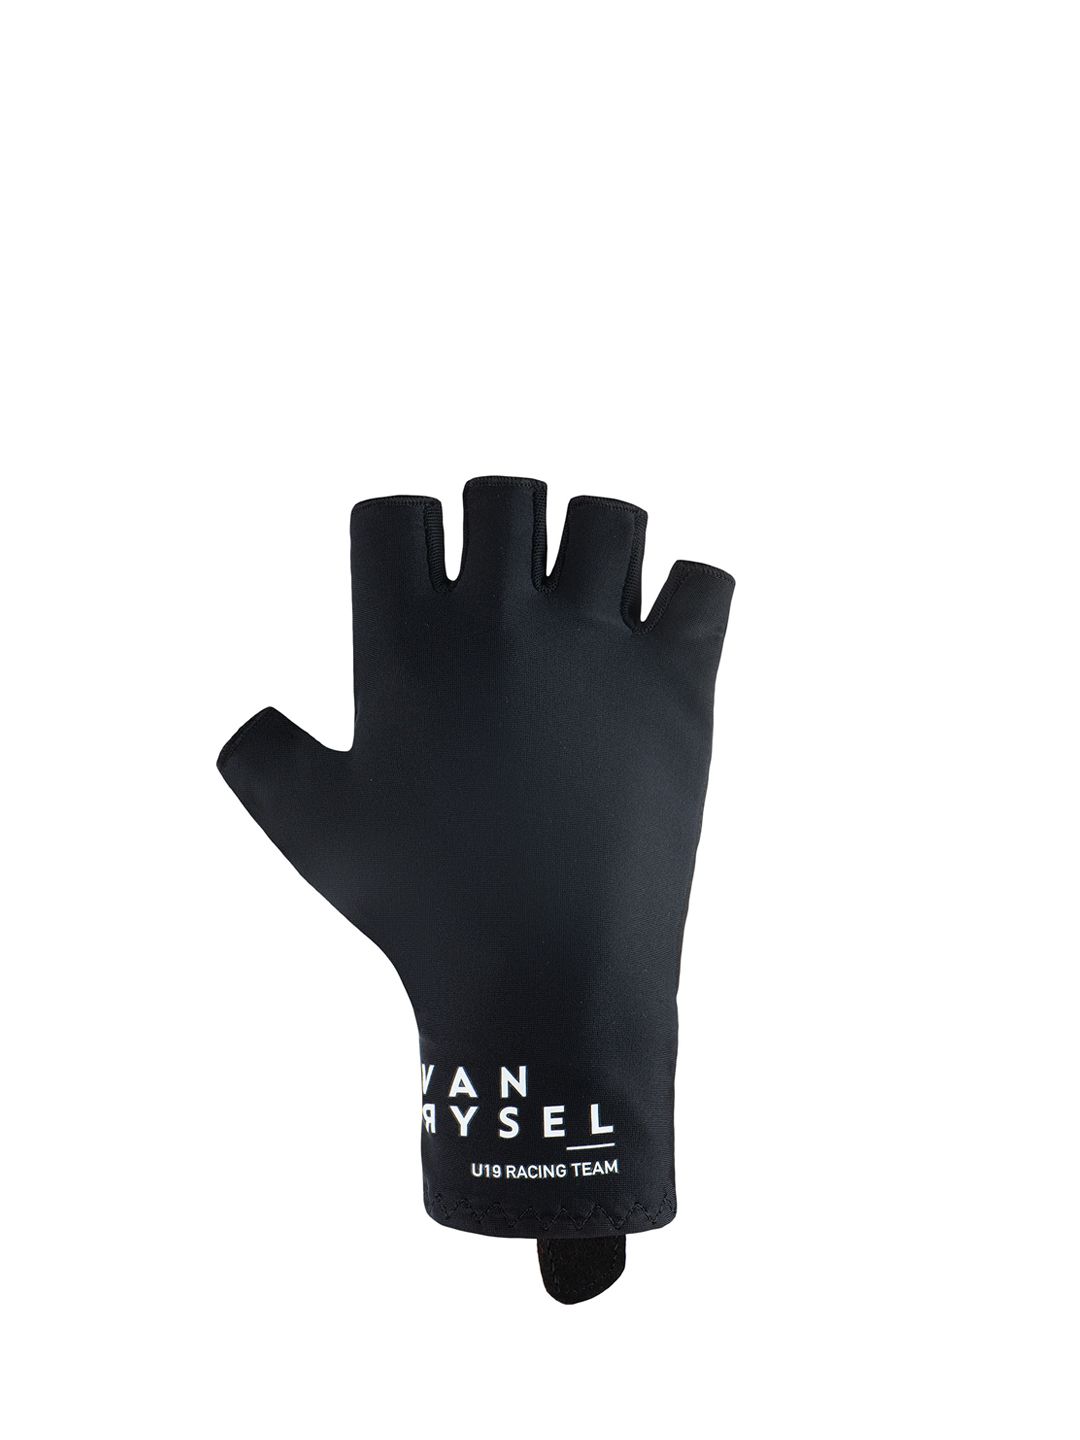 VAN RYSEL By Decathlon Unisex Black Solid RoadR 900 Cycling Gloves Price in India